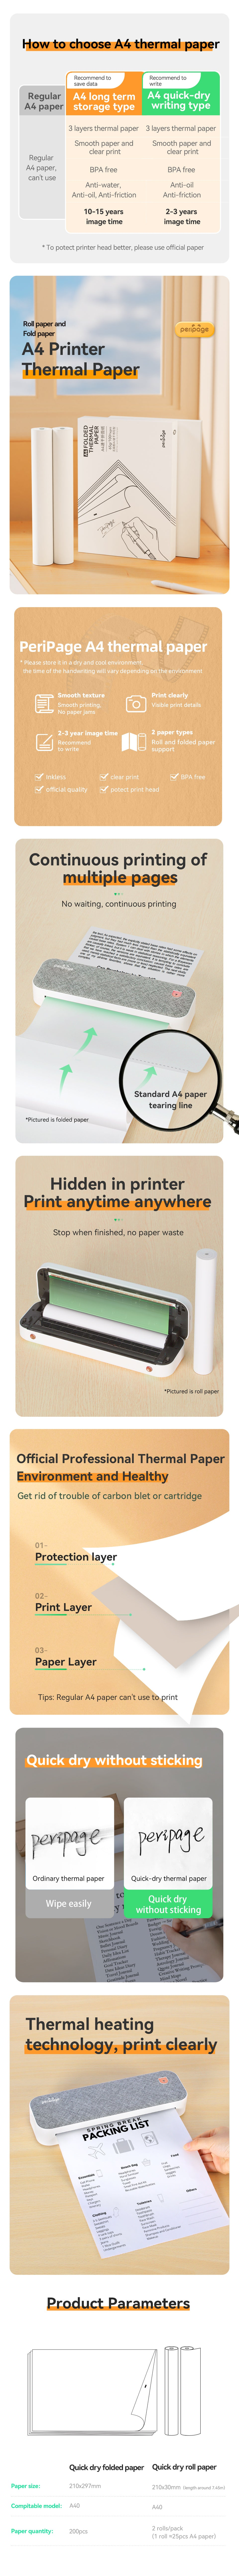 PeriPage A4 Paper Printer Direct Thermal Transfer Wirless Printer Z3K6